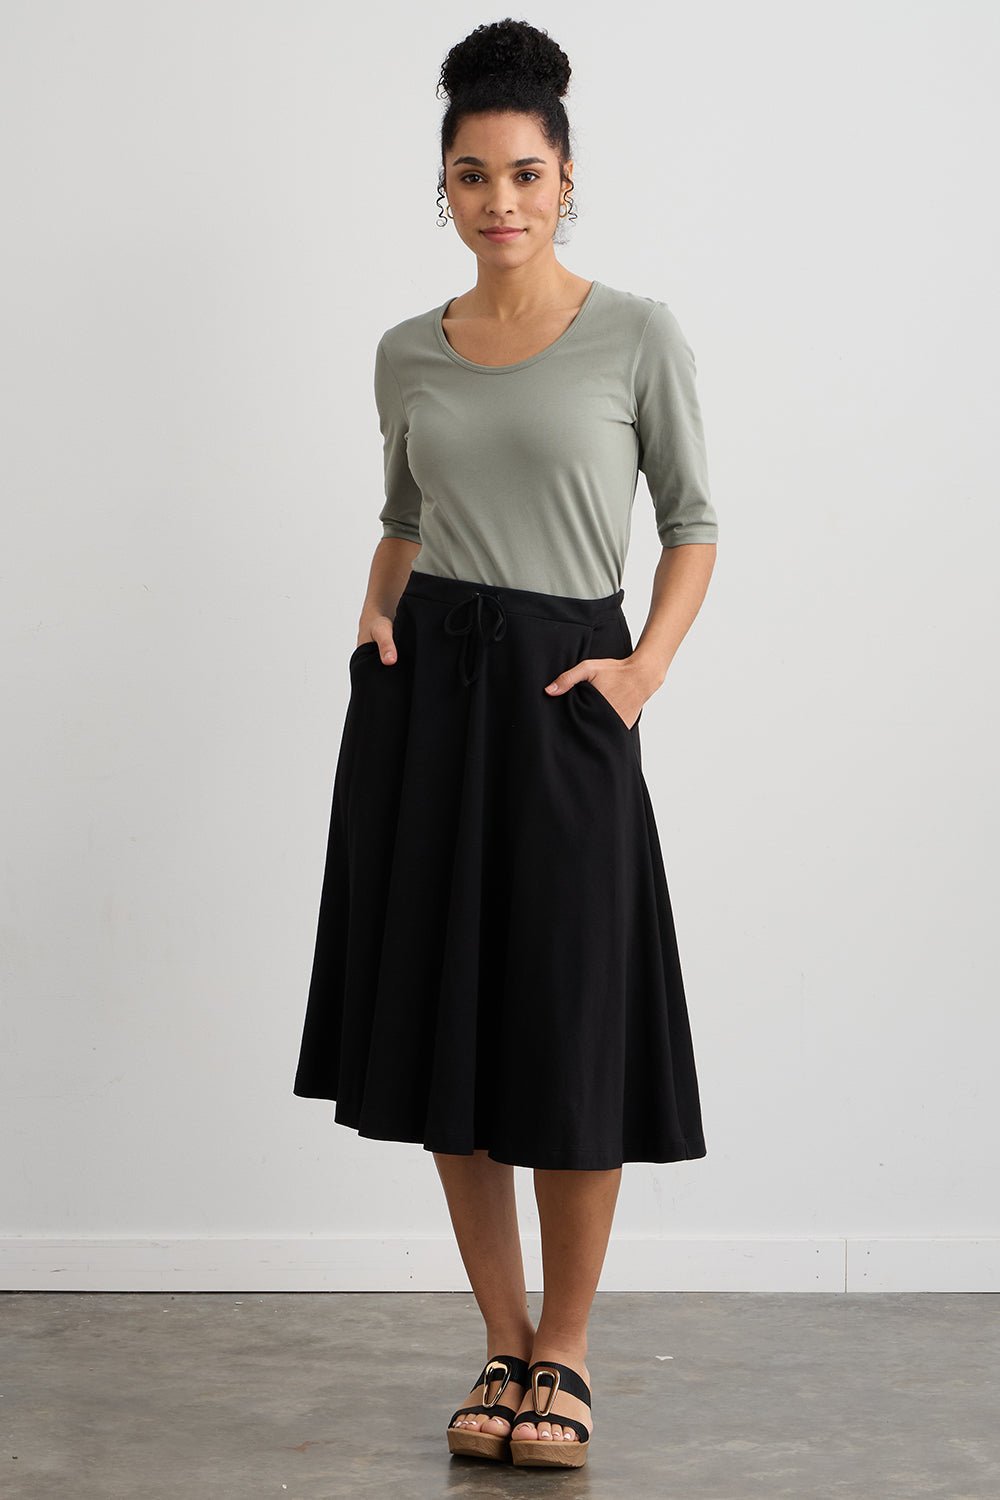 Women's 100% Organic Cotton Midi Skirt with Pockets